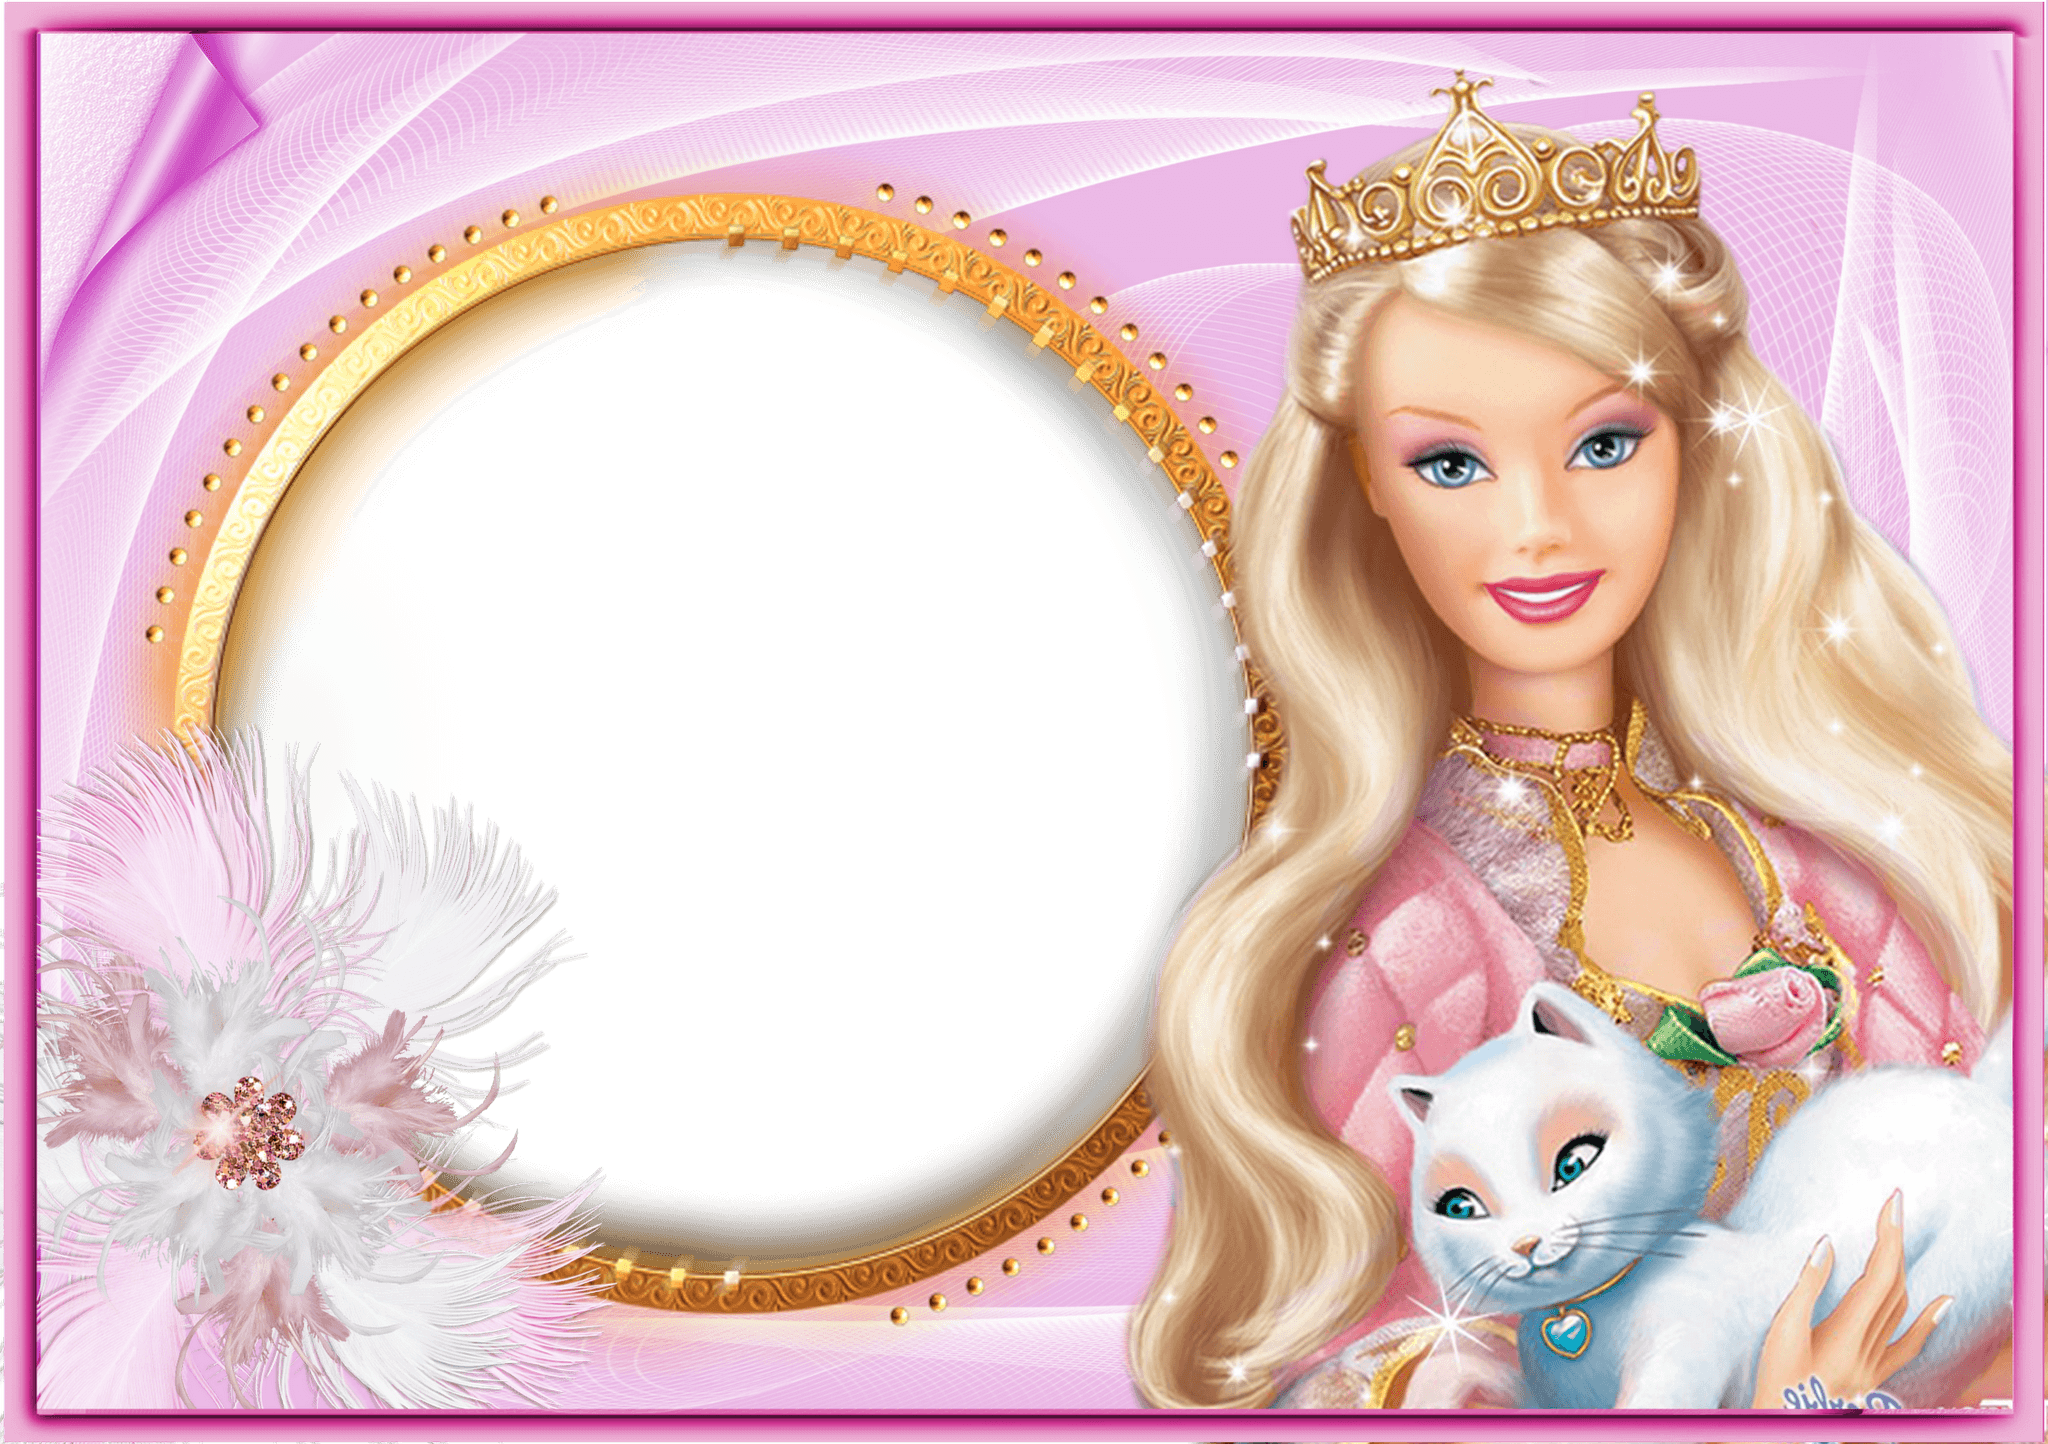 Barbie Wallpaper (20)